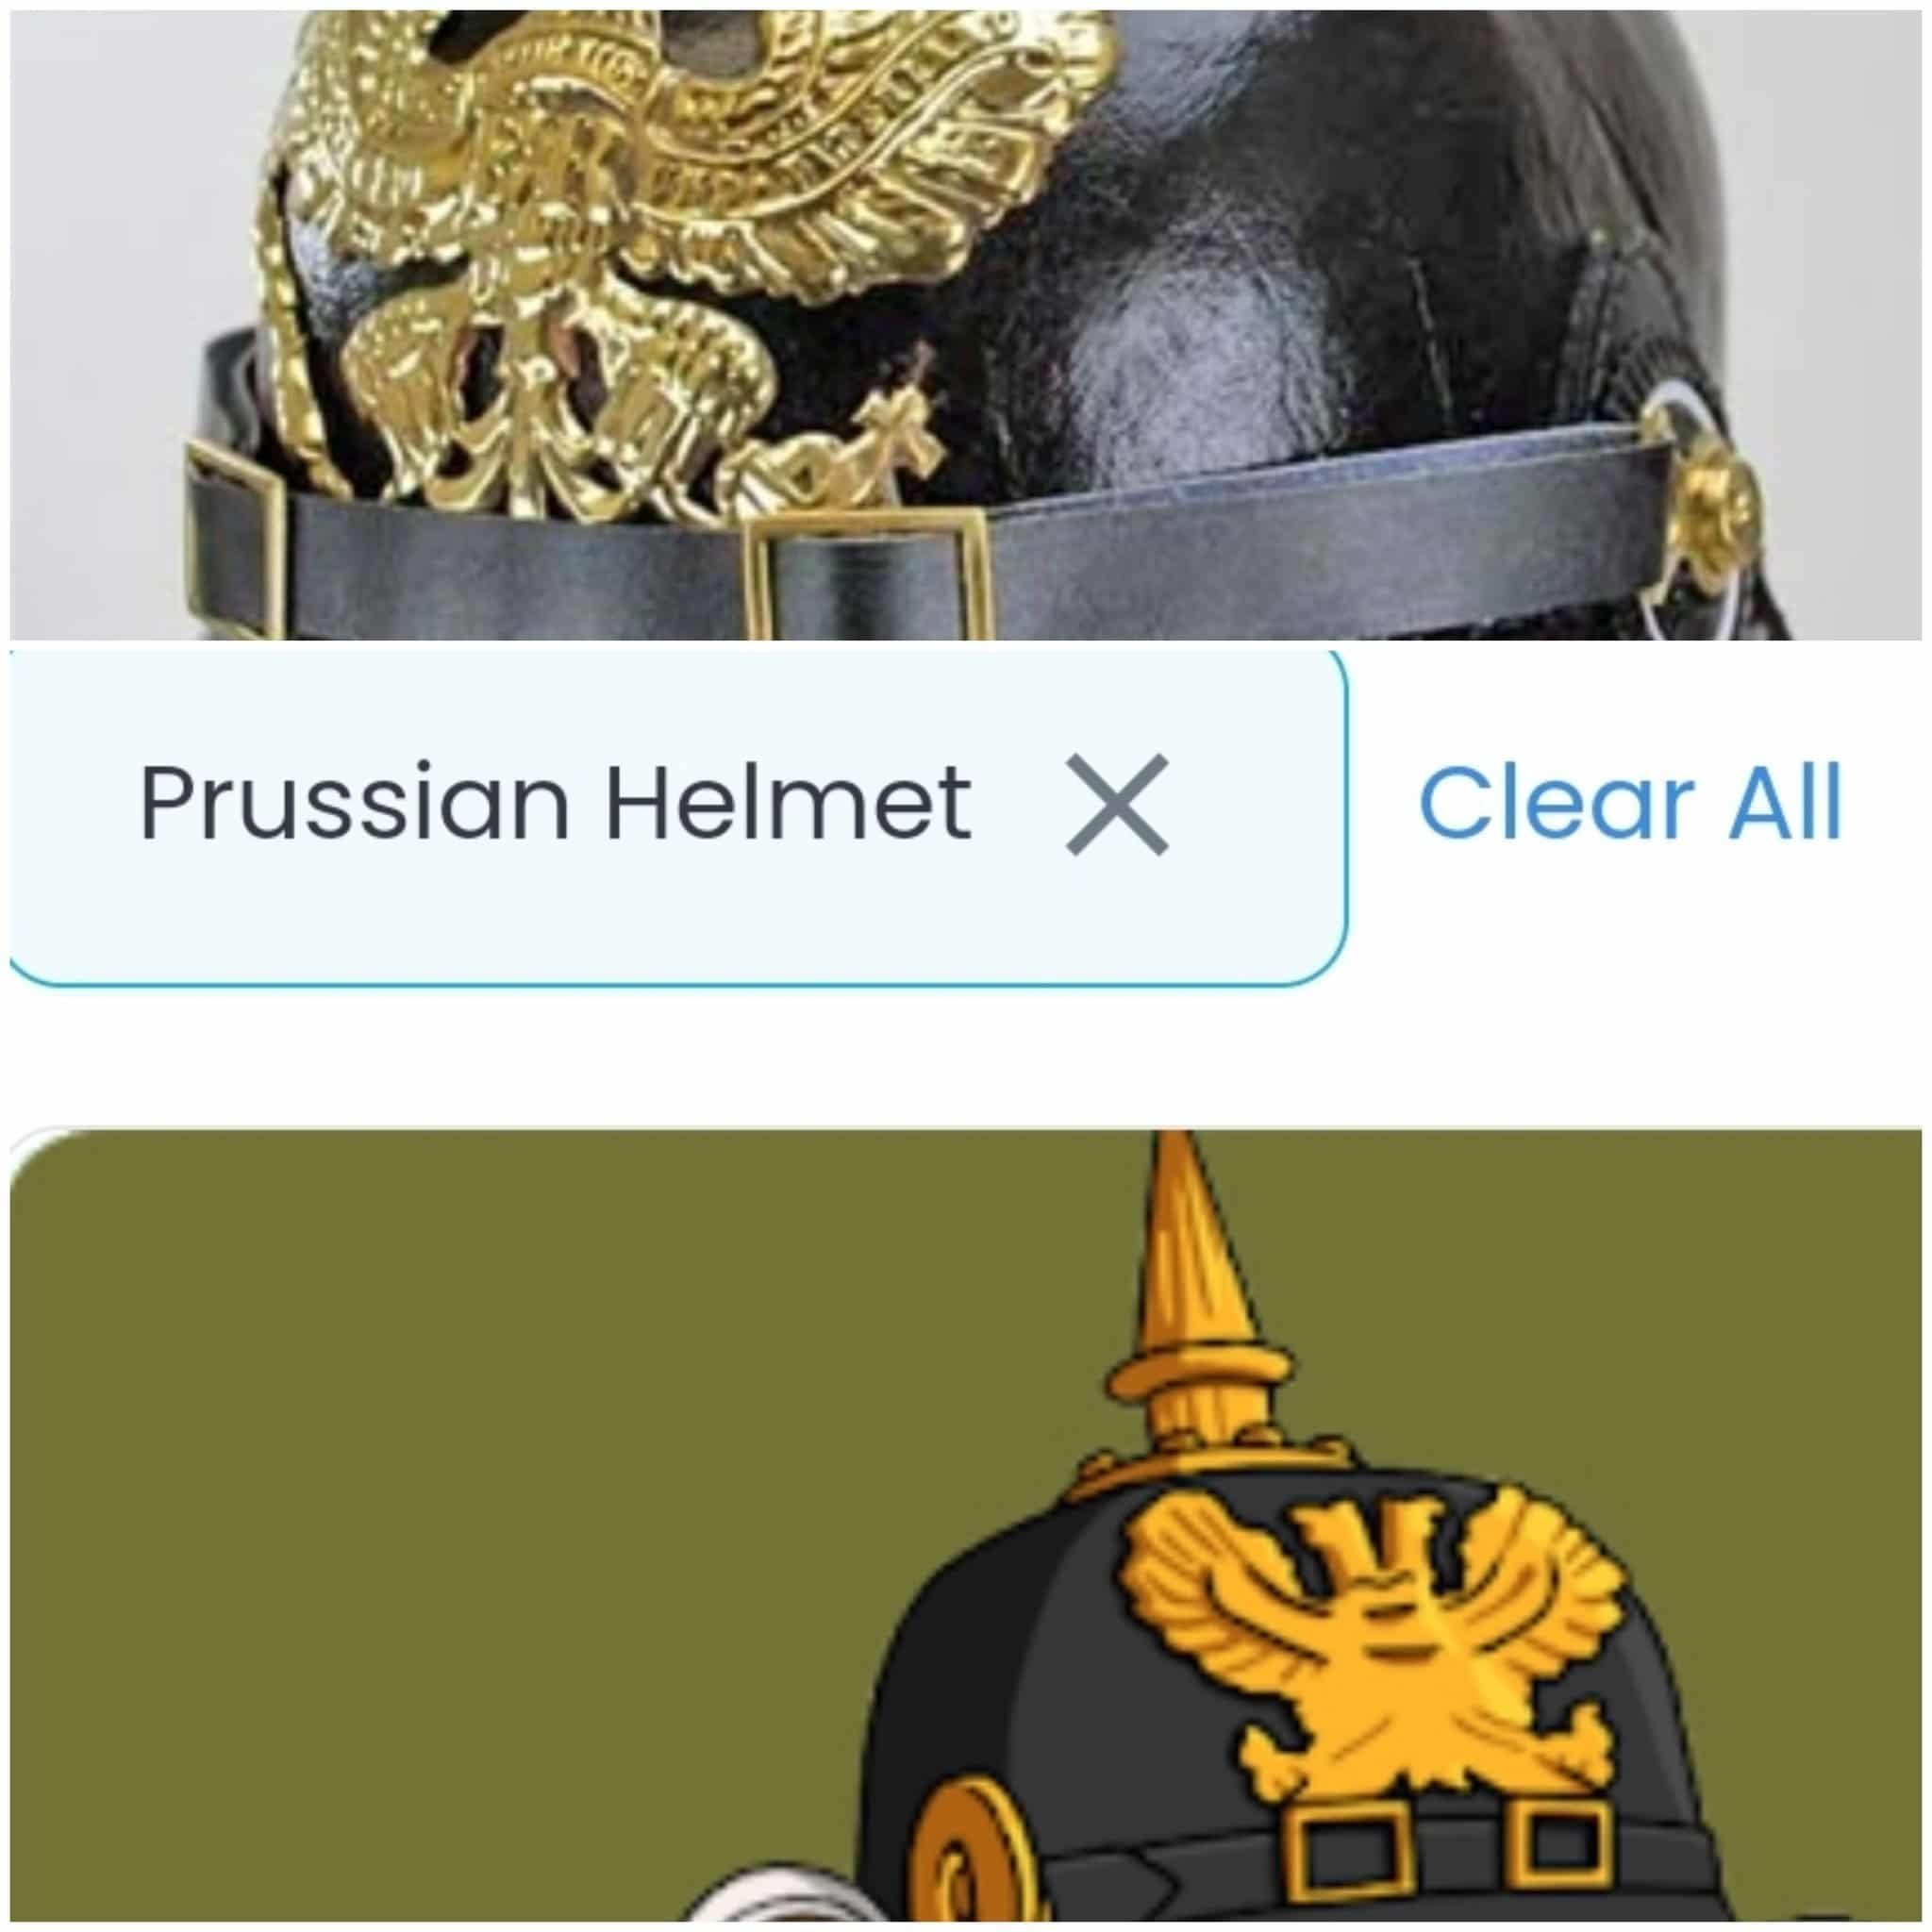 Picture depicts helmet